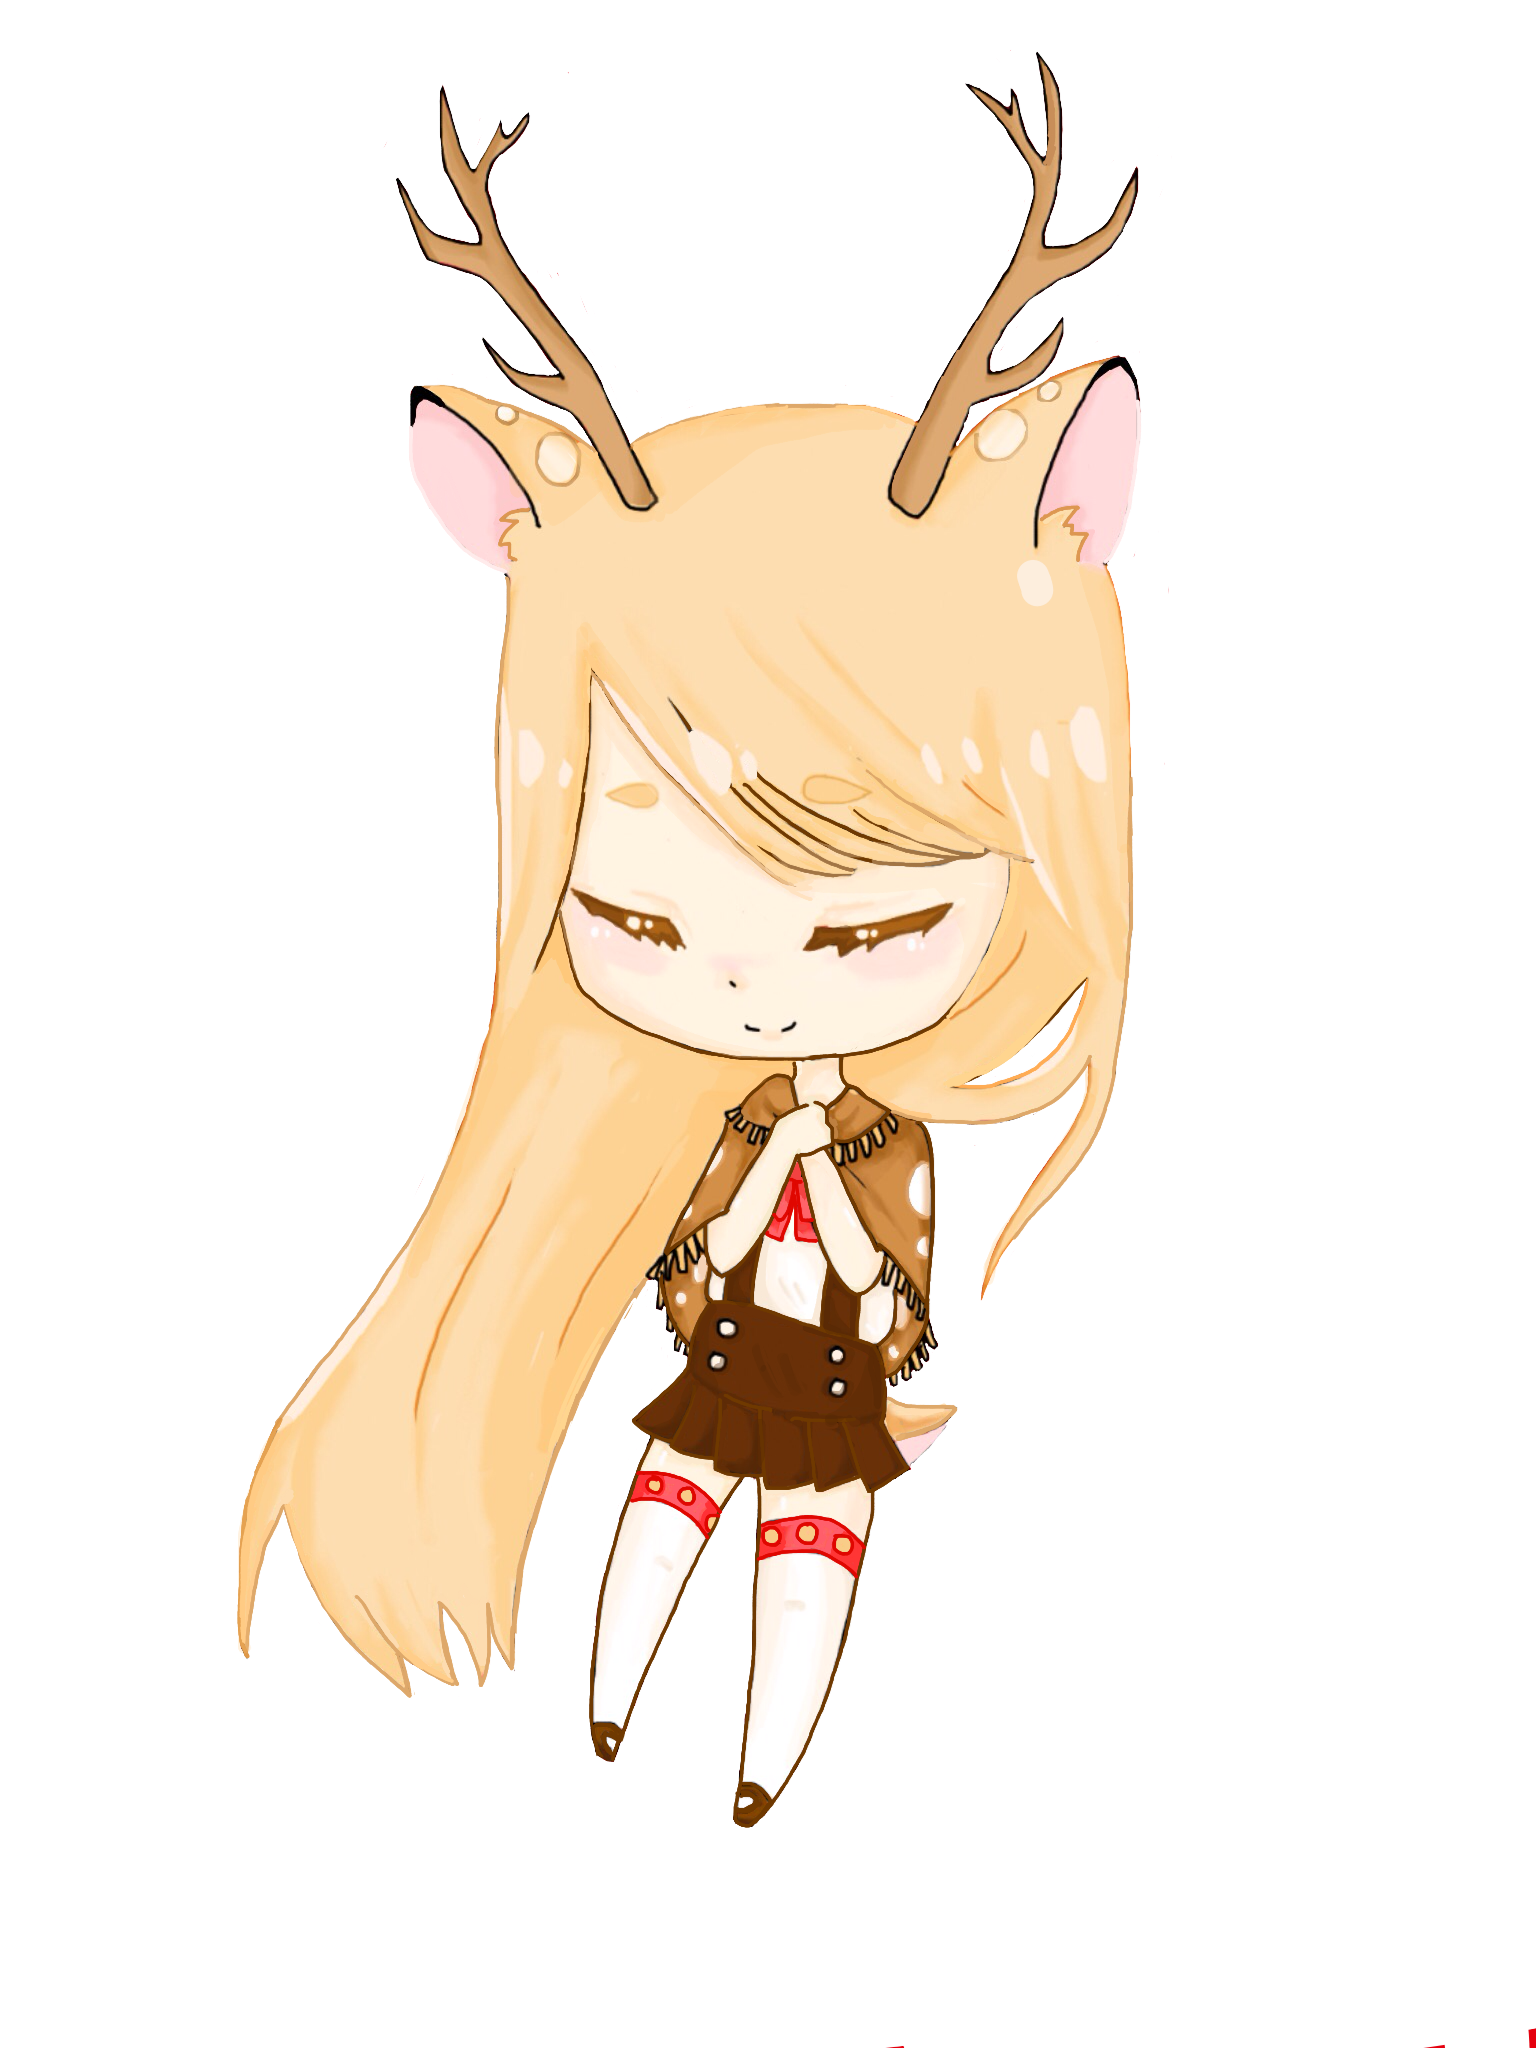 Inspirational Cute Anime Deer Girl